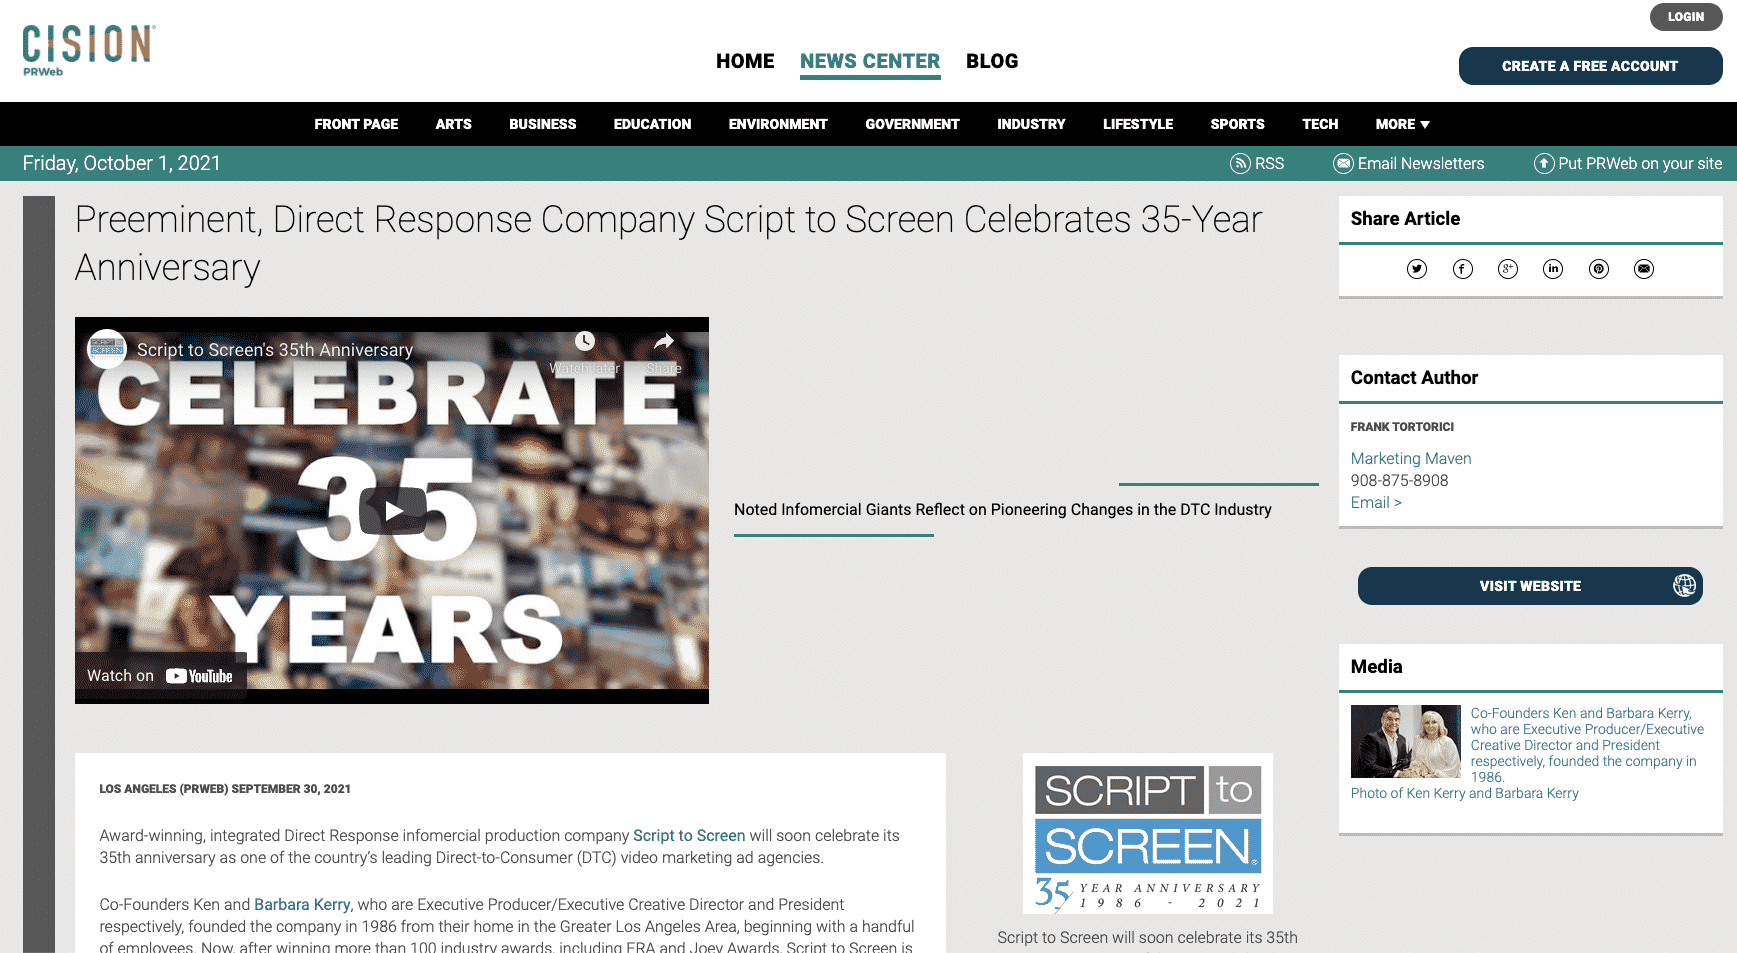 Preeminent, Direct Response Company Script to Screen Celebrates 35-Year Anniversary